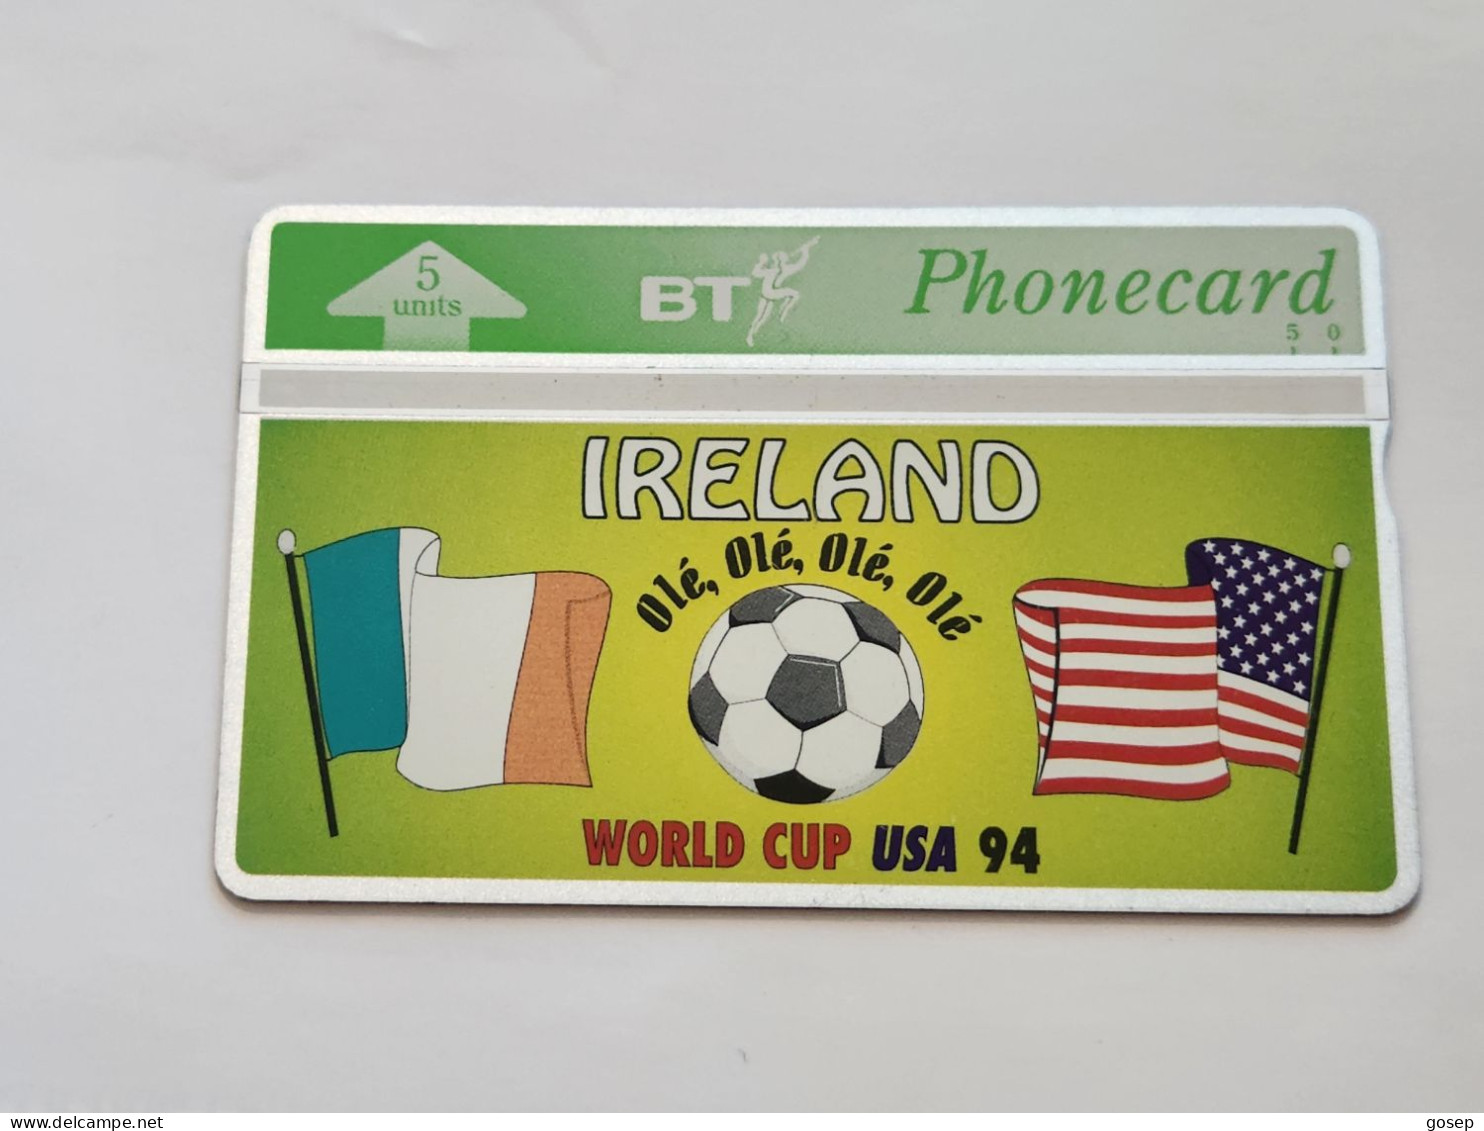 United Kingdom-(BTG-272)-Ireland World Cup-USA-1994-(261)(5units)(403D58107)(tirage-5.000)-price Cataloge-6.00£-mint - BT Emissions Générales